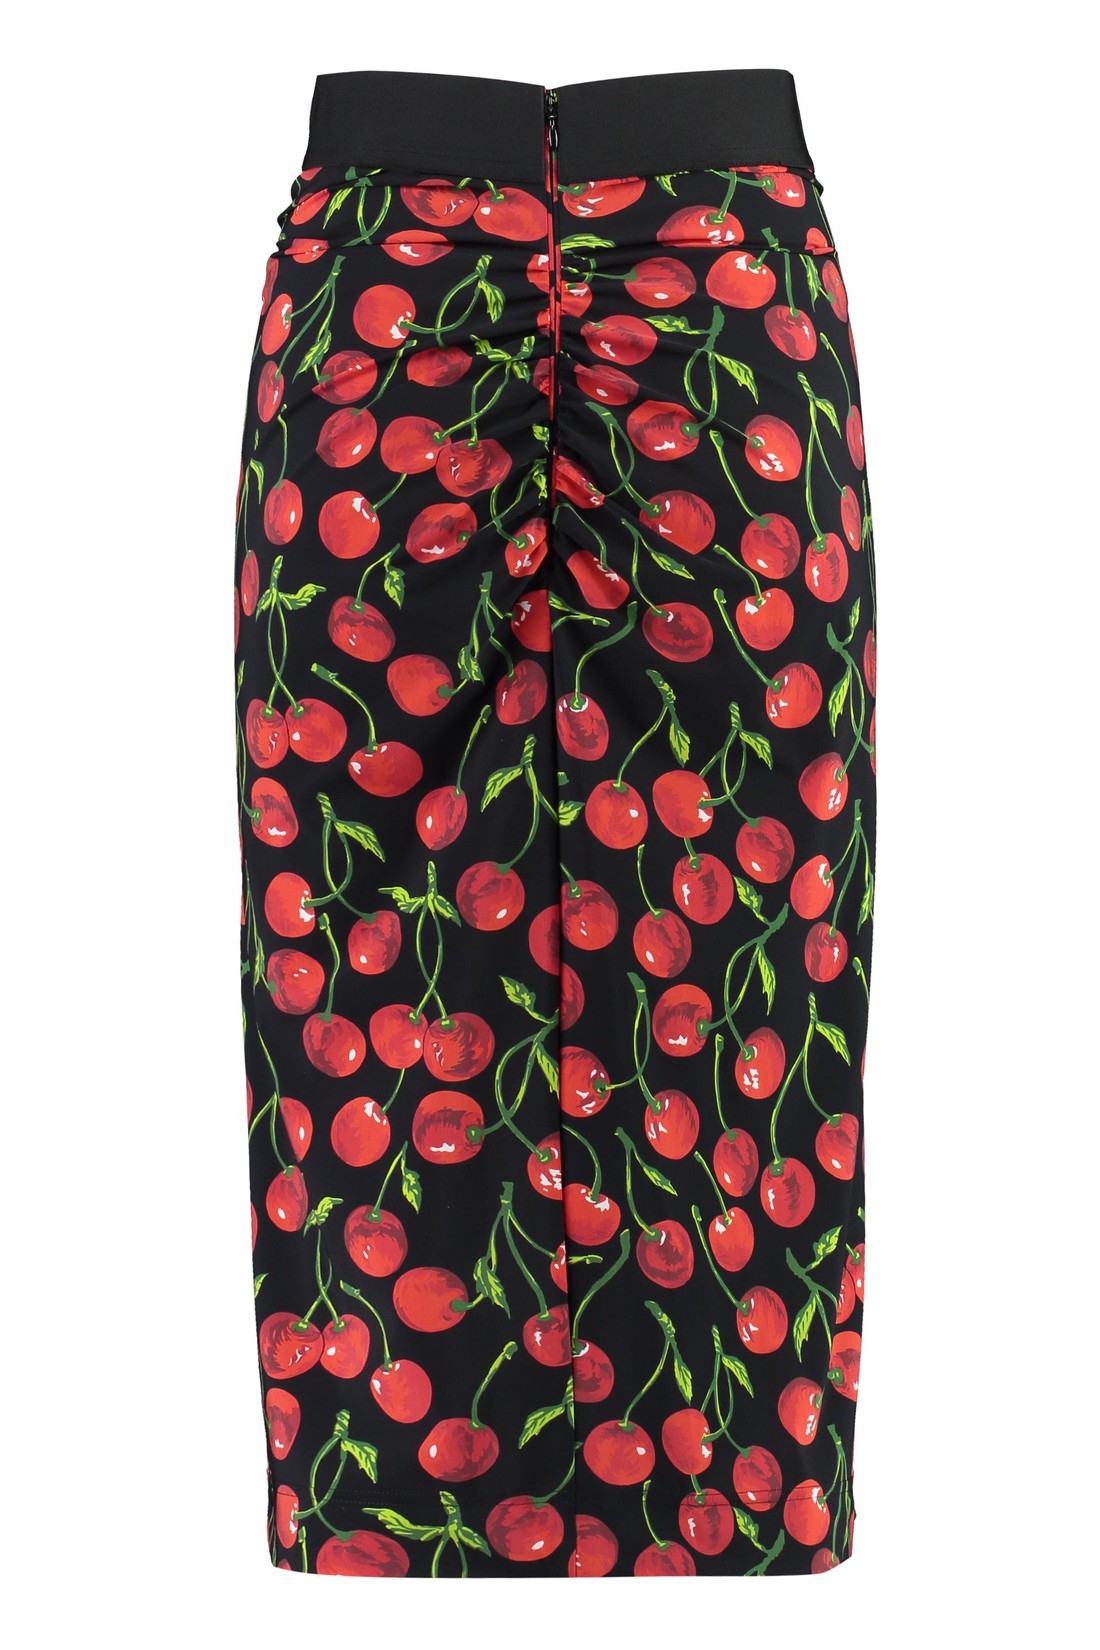 Dolce & Gabbana-OUTLET-SALE-Printed pencil skirt-ARCHIVIST